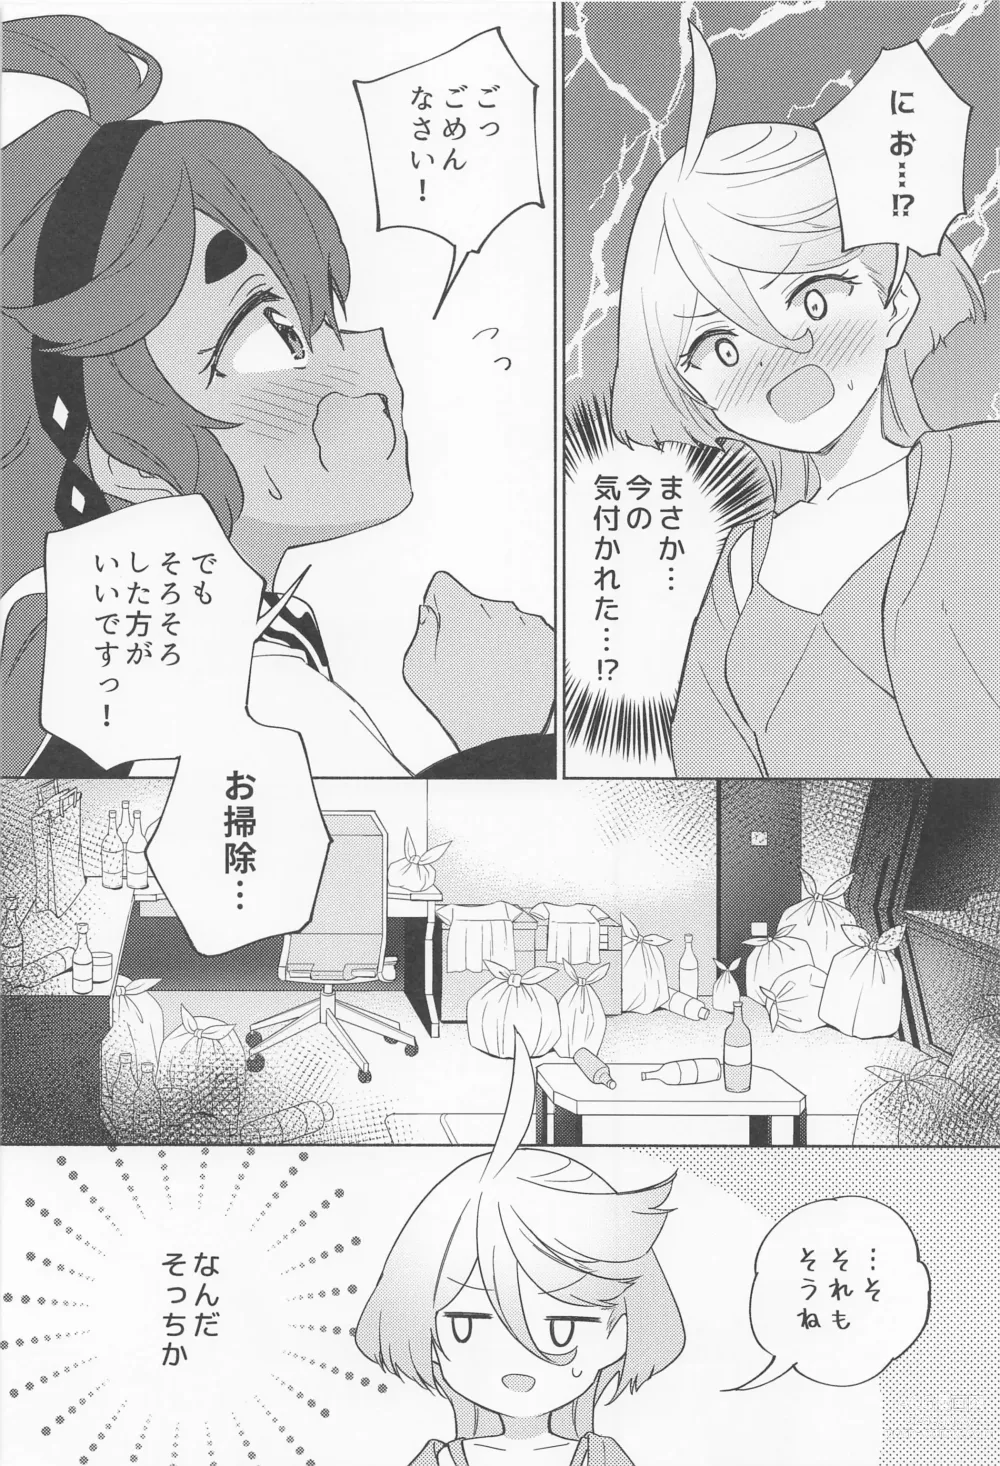 Page 7 of doujinshi Kimi no Kaori shika Shinai - It only smells like a fiancée.